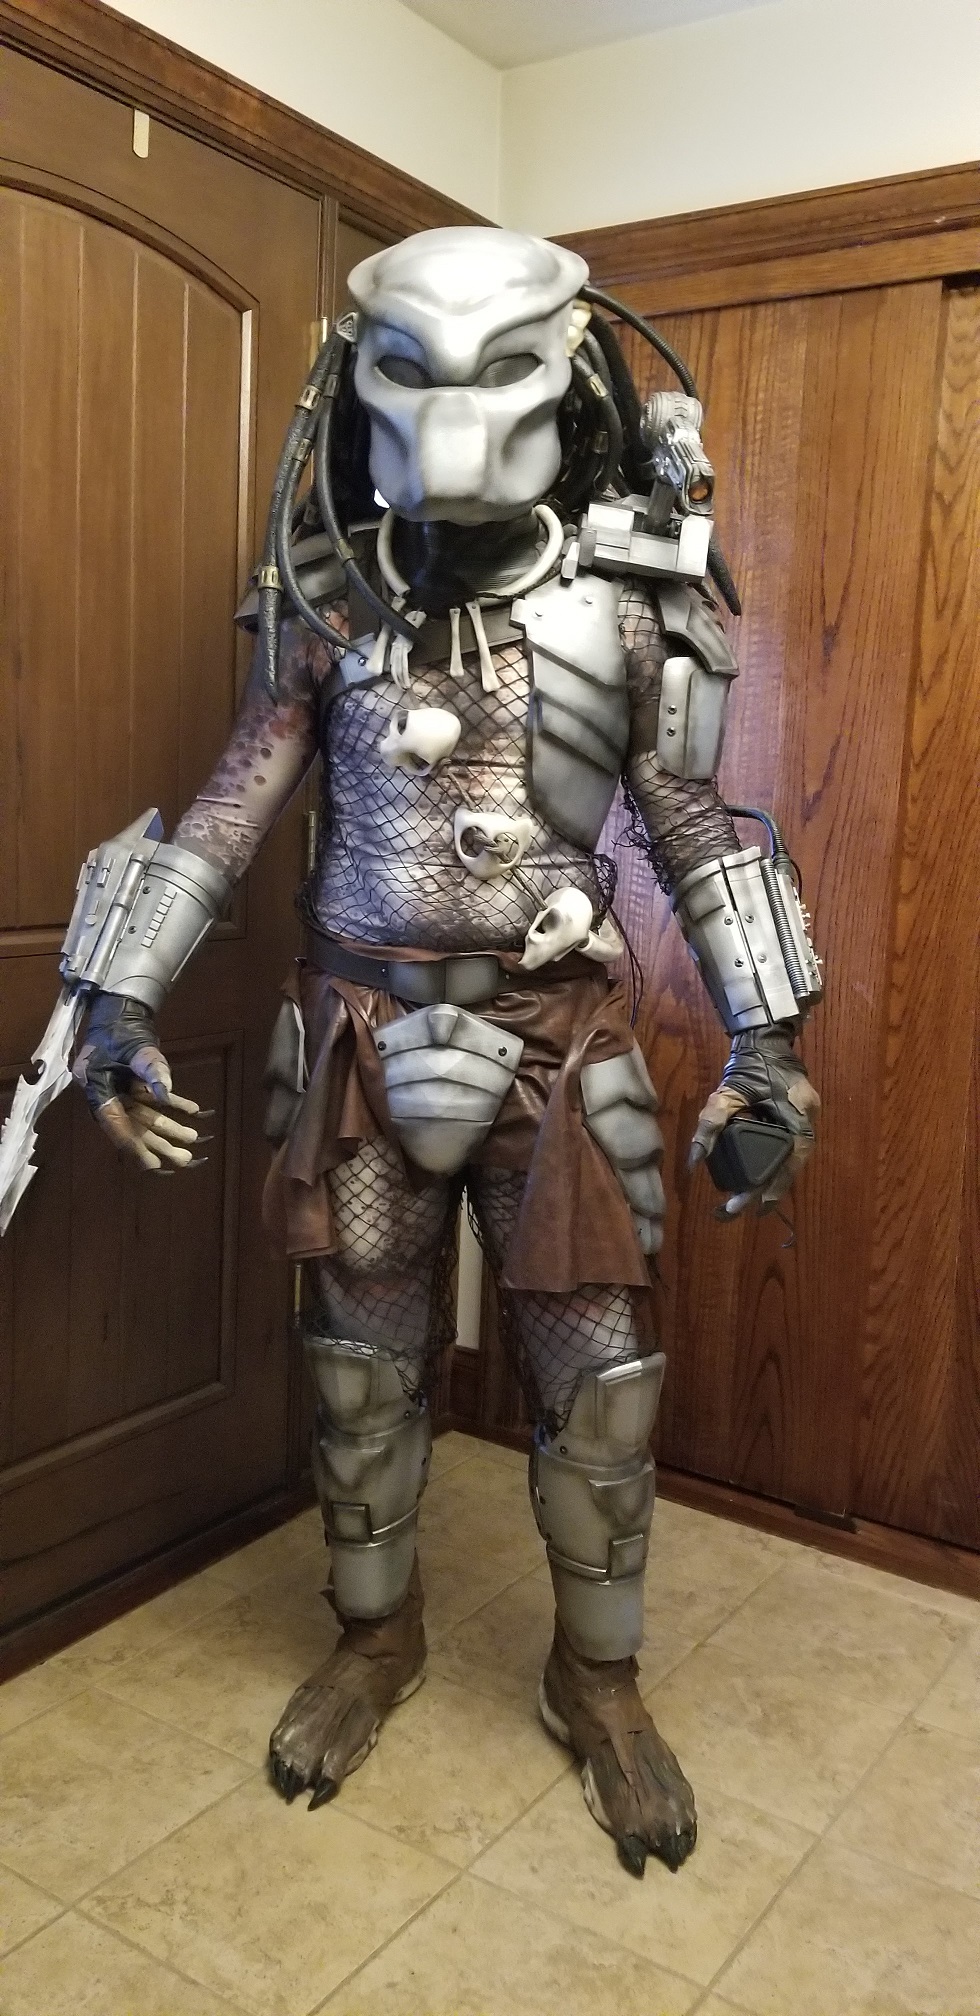 Predator Cosplay: Wearing a Predator Costume